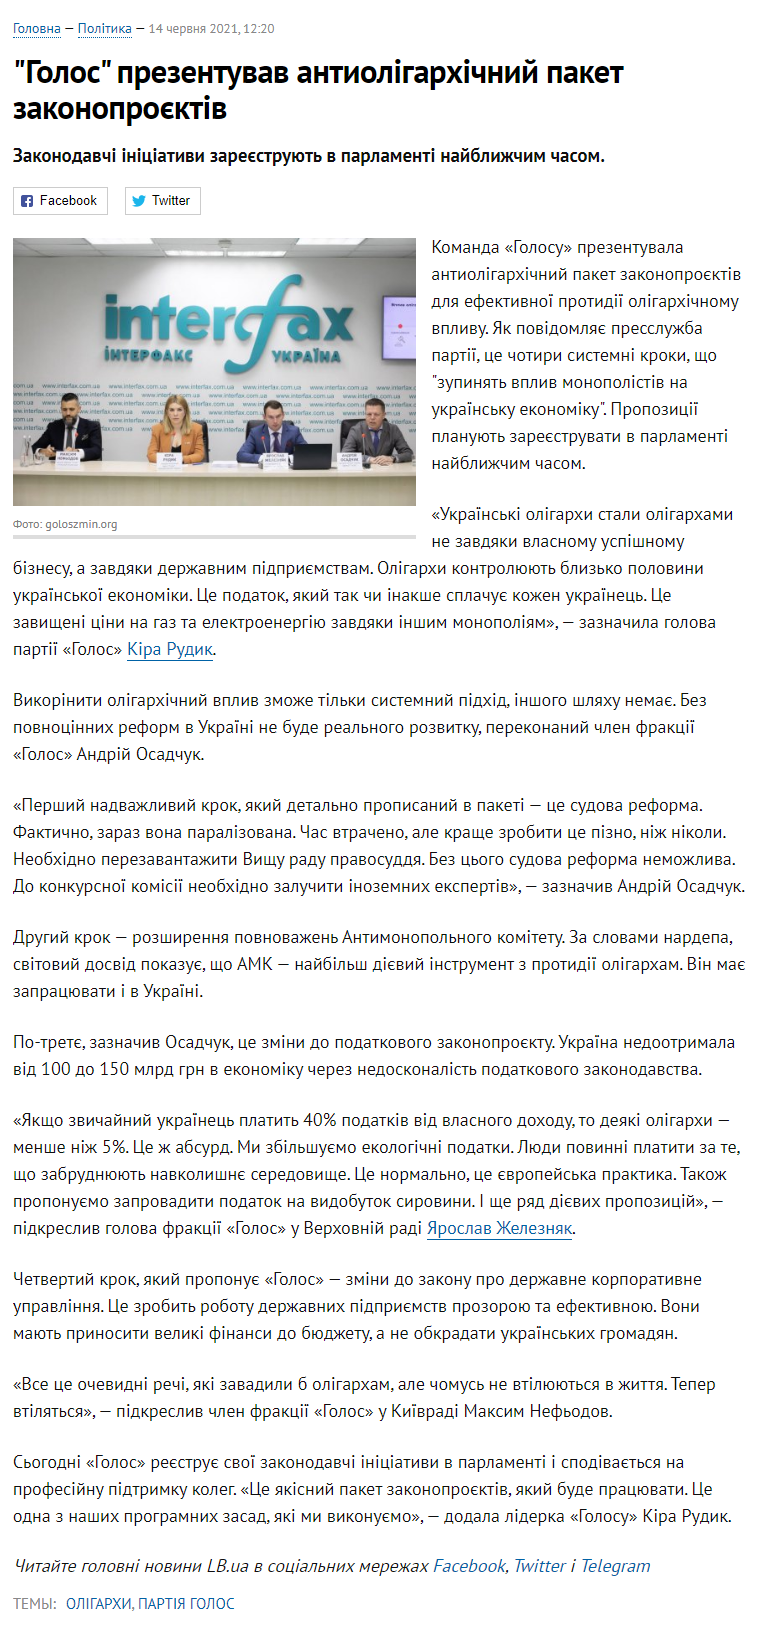 https://lb.ua/news/2021/06/14/486980_golos_prezentuvav.html